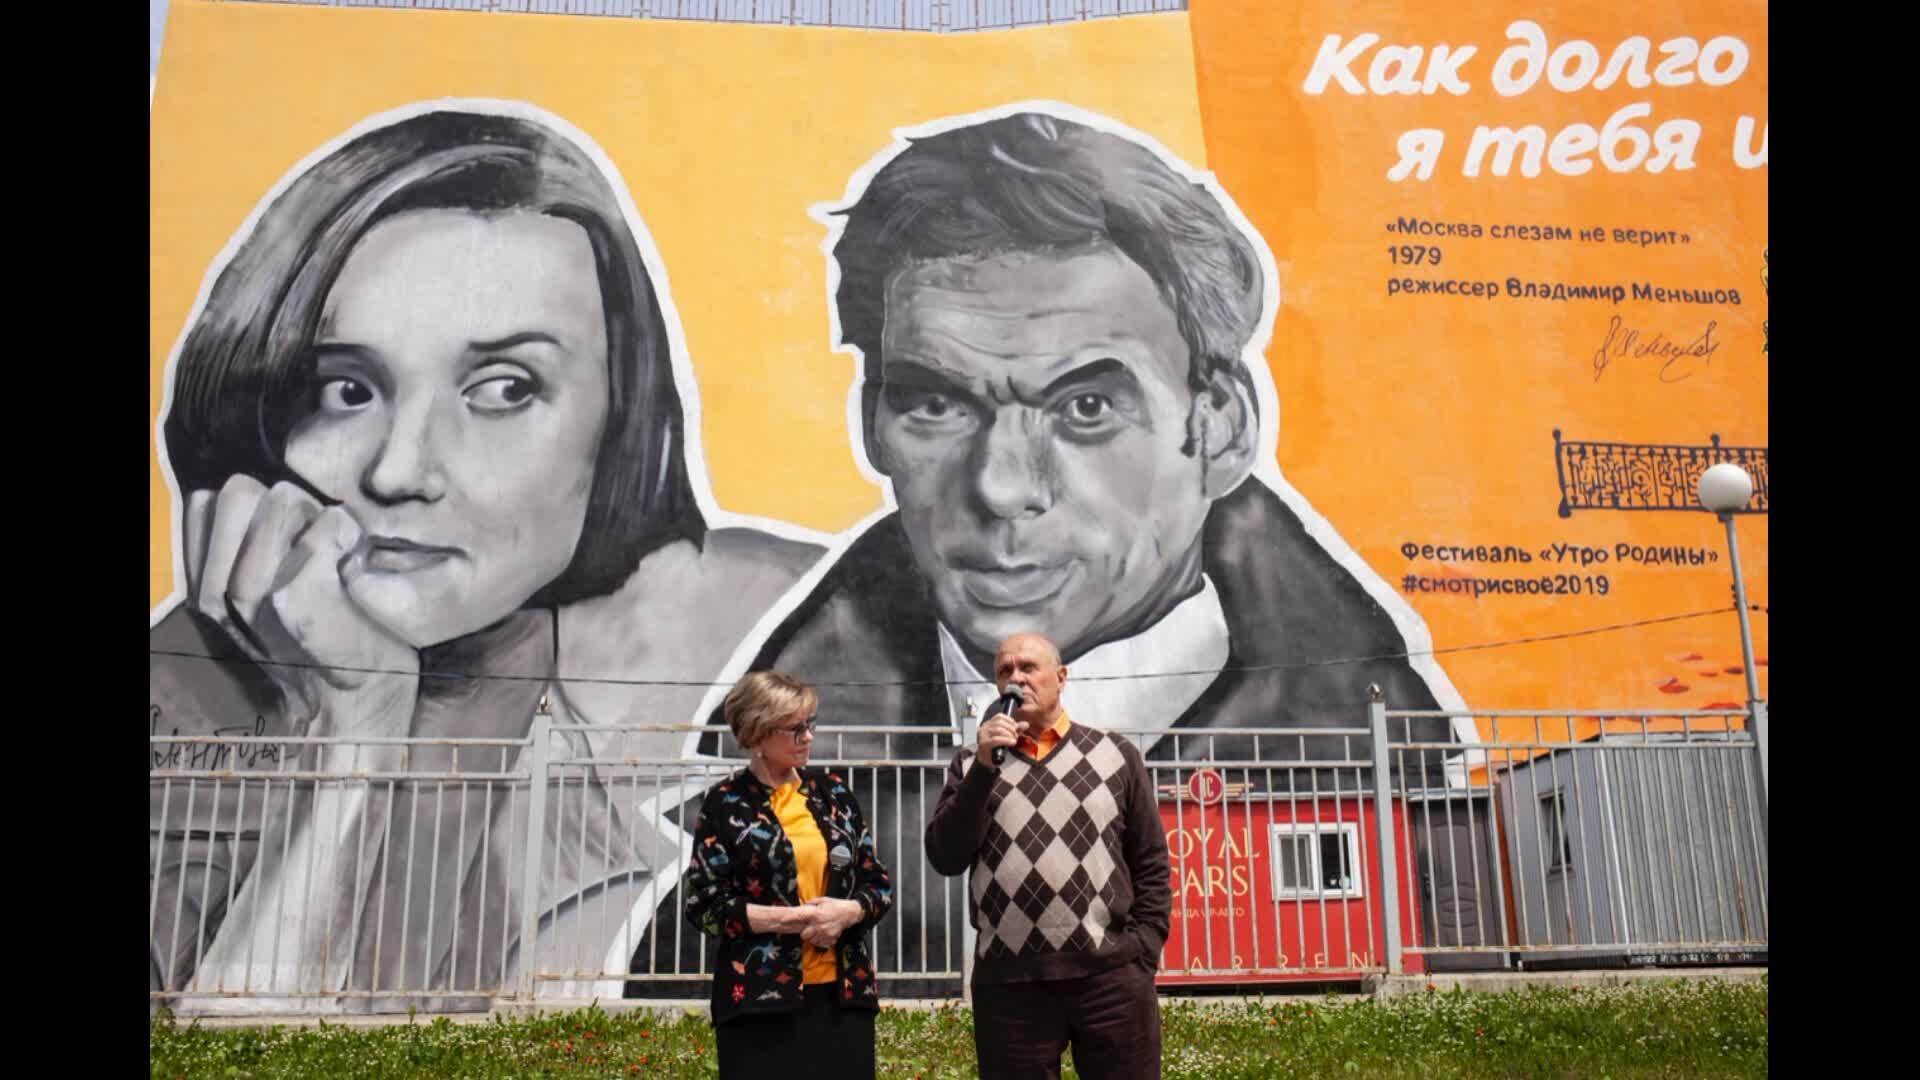 Реклама на домашнем москва слезам не верит. Граффити Москва слезам не верит Южно Сахалинск.